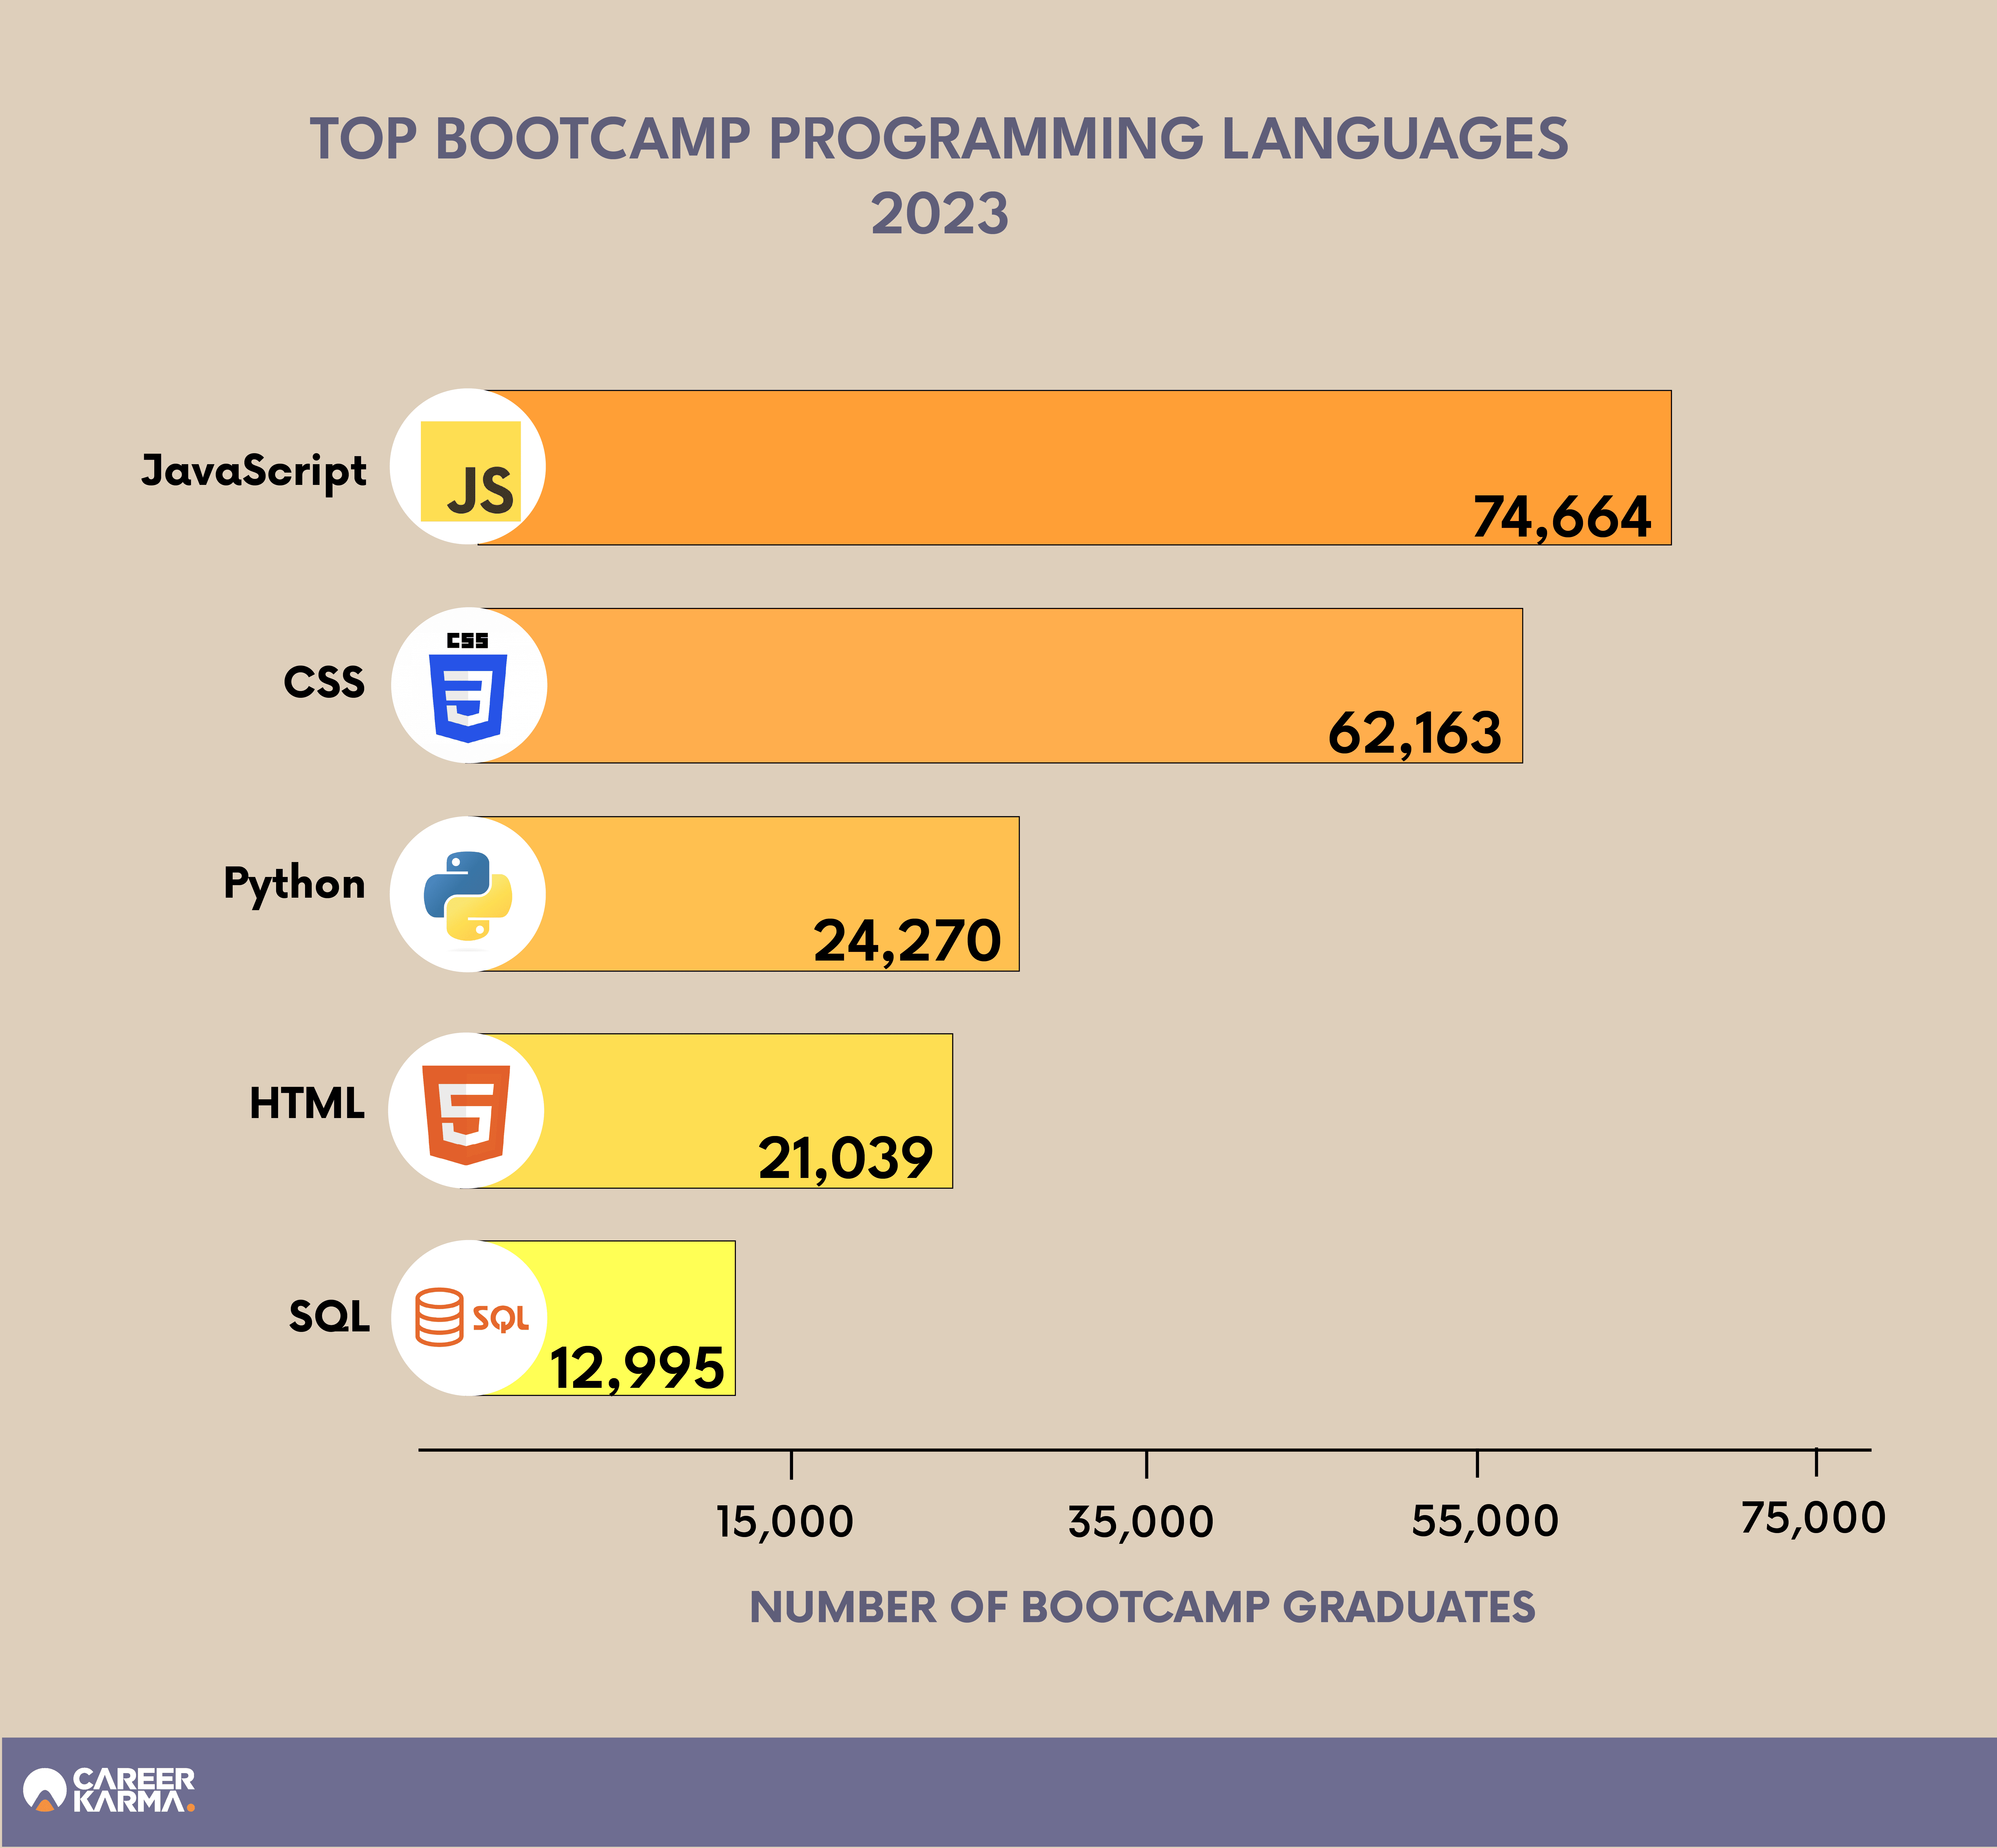 Top bootcamp programming languages 2023